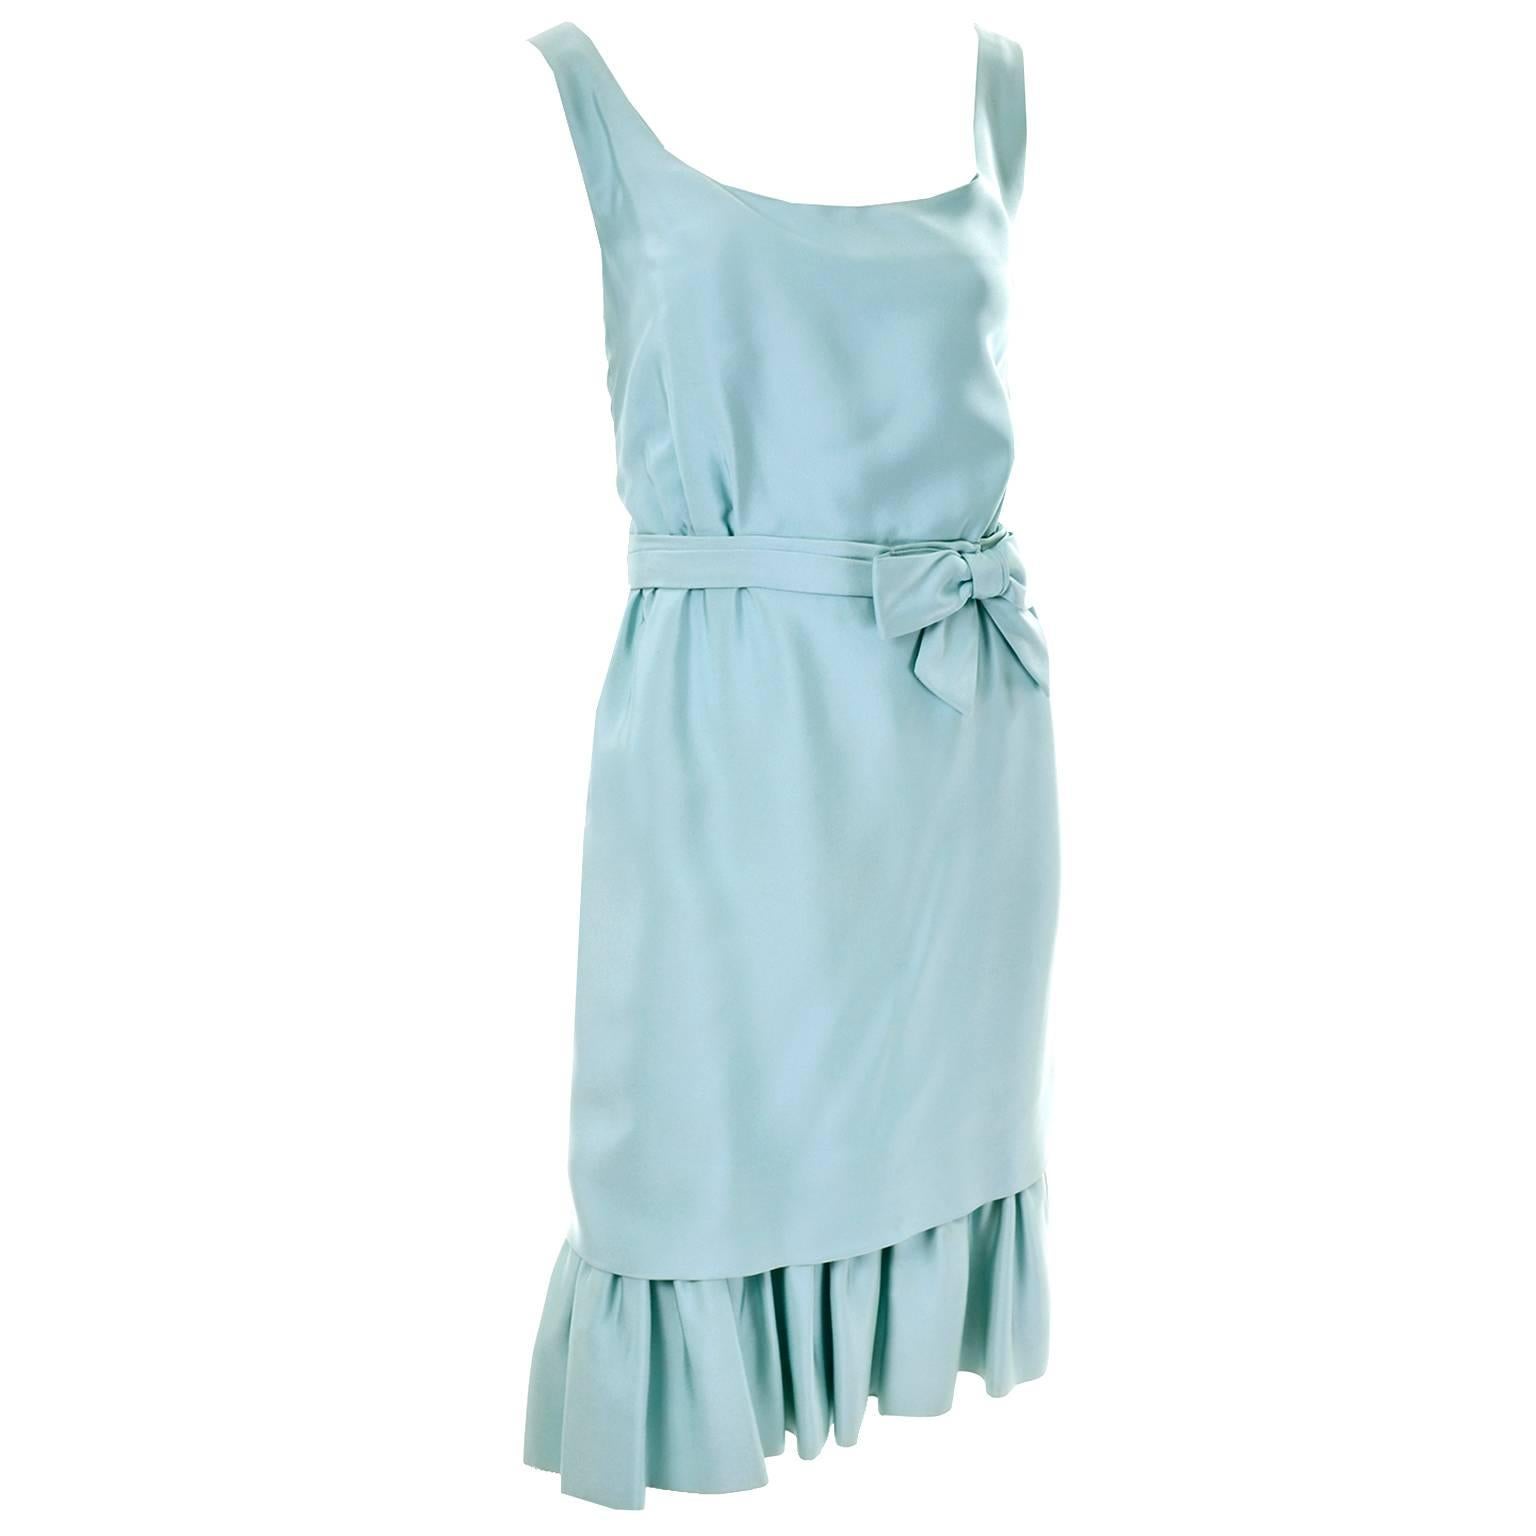 1960s Vintage Dress by Jobere in Blue Green Shantung Silk w/ Ruffle & Bow